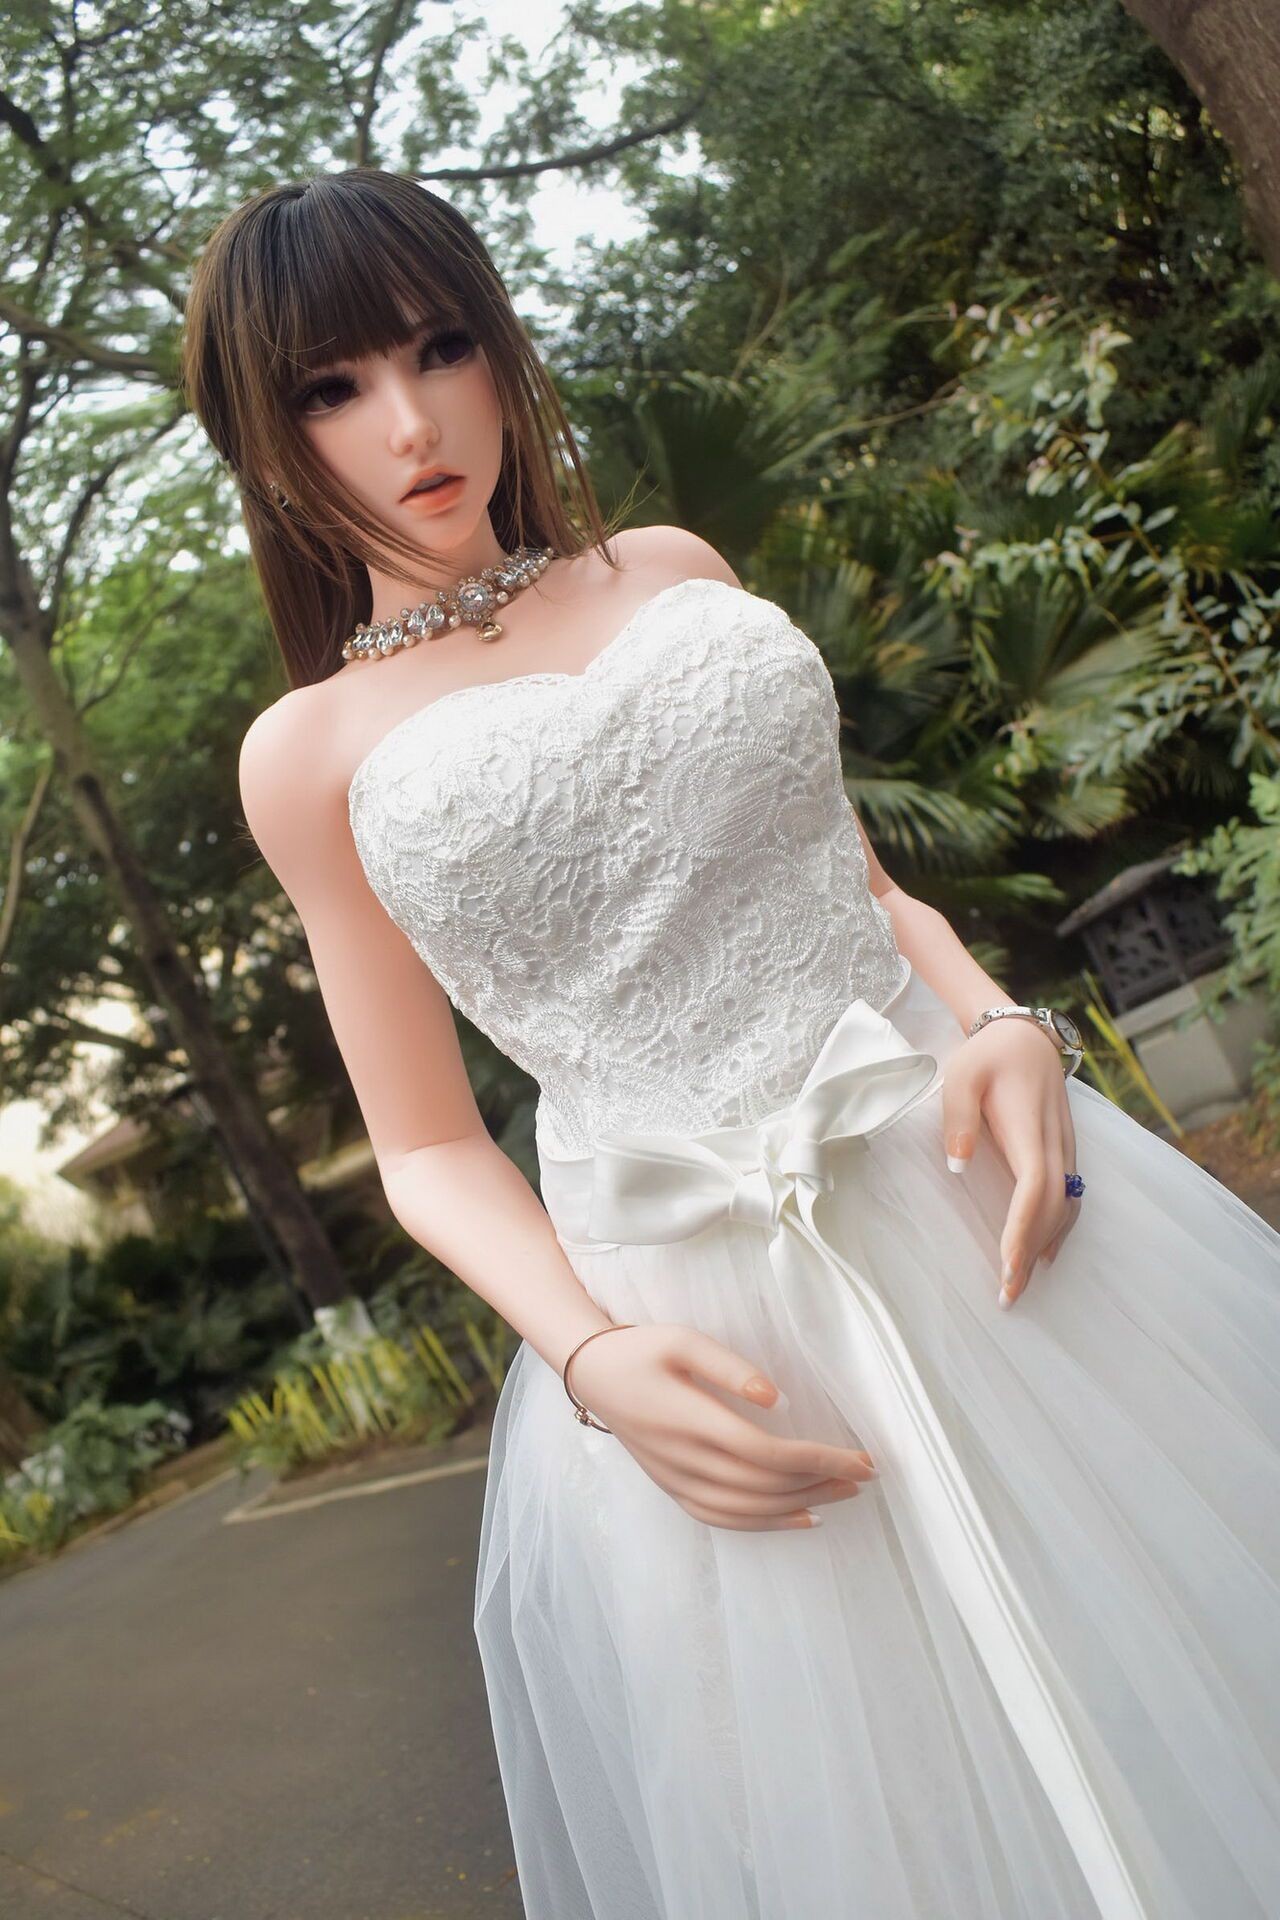 Exhibition 150CM HB031 Kurai Sakura-Bride In Bud, To Be Married! By QIN Pure18